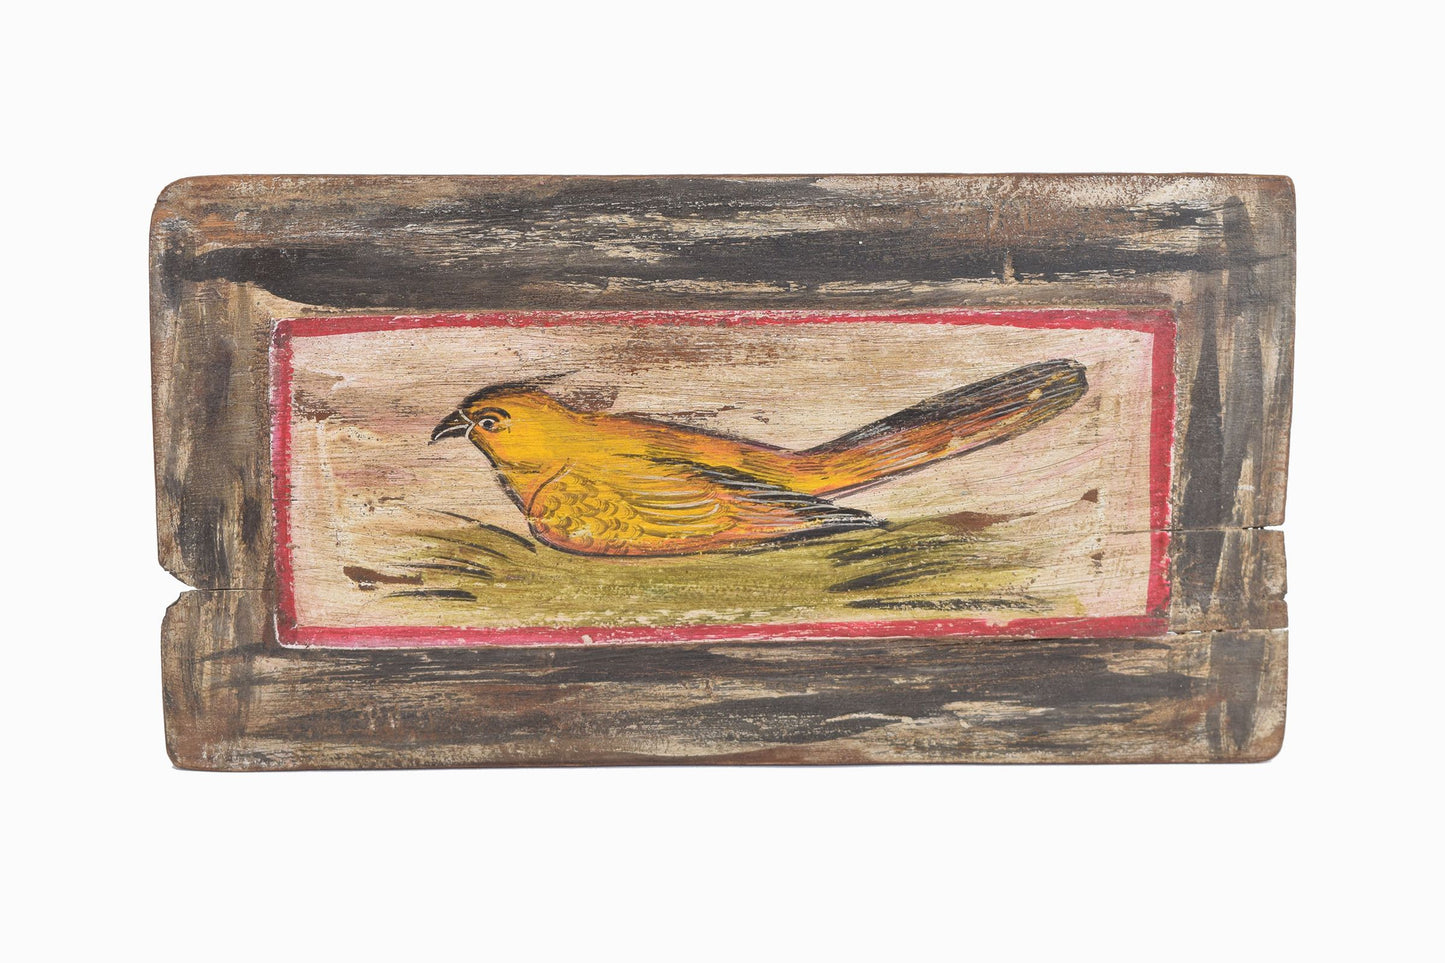 Panel pájaro de madera pintado Ref 3